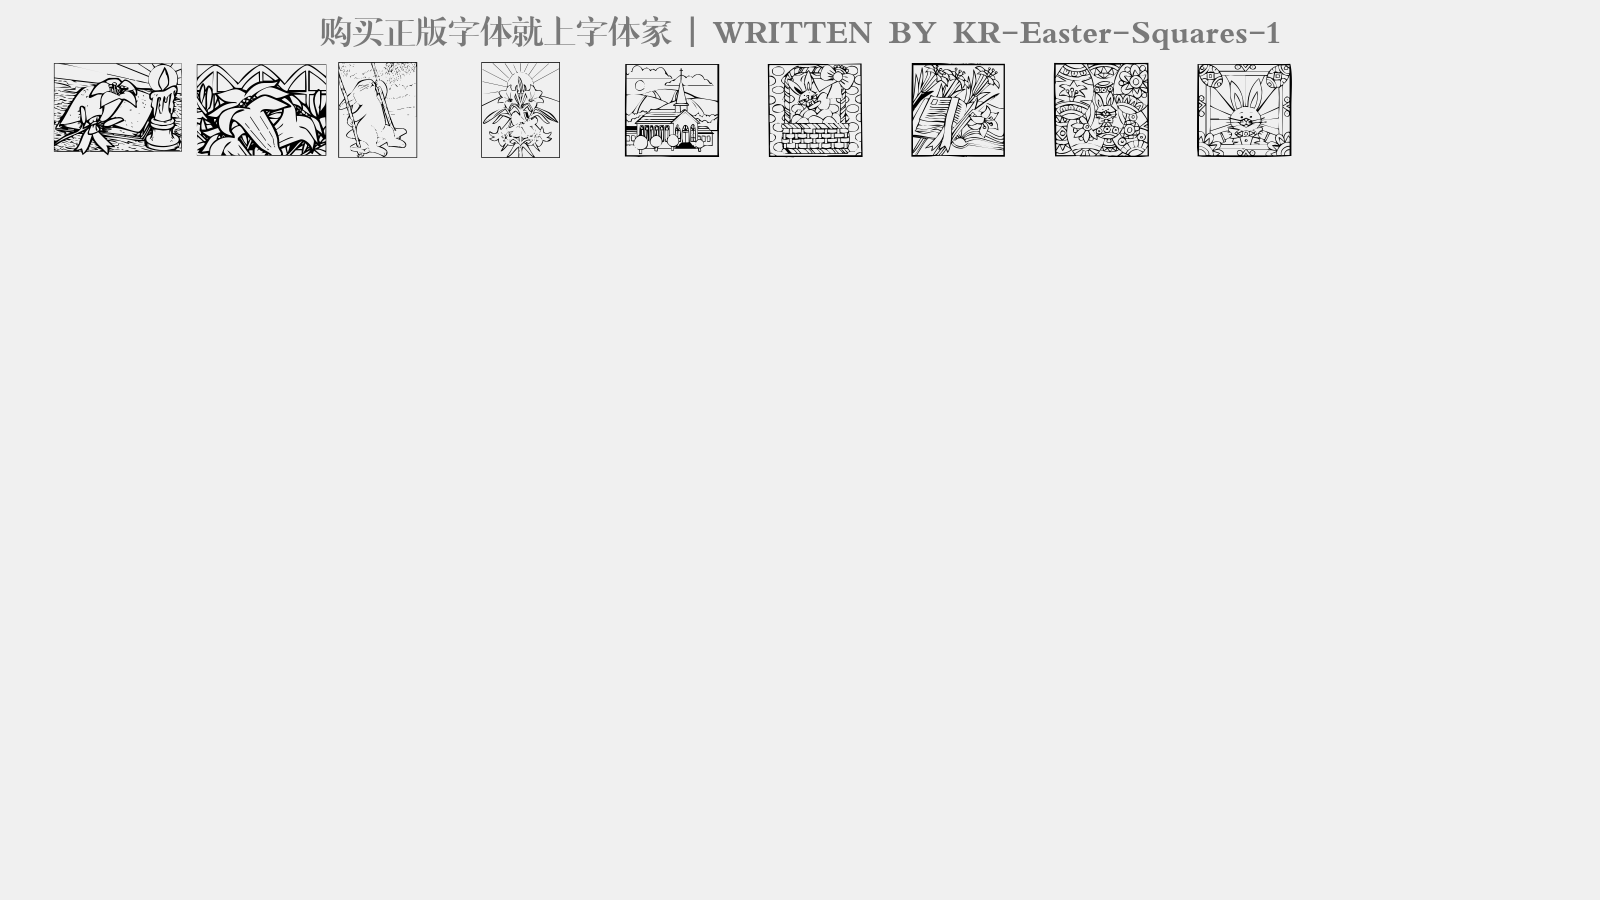 KR-Easter-Squares-1 - 大写字母/小写字母/数字